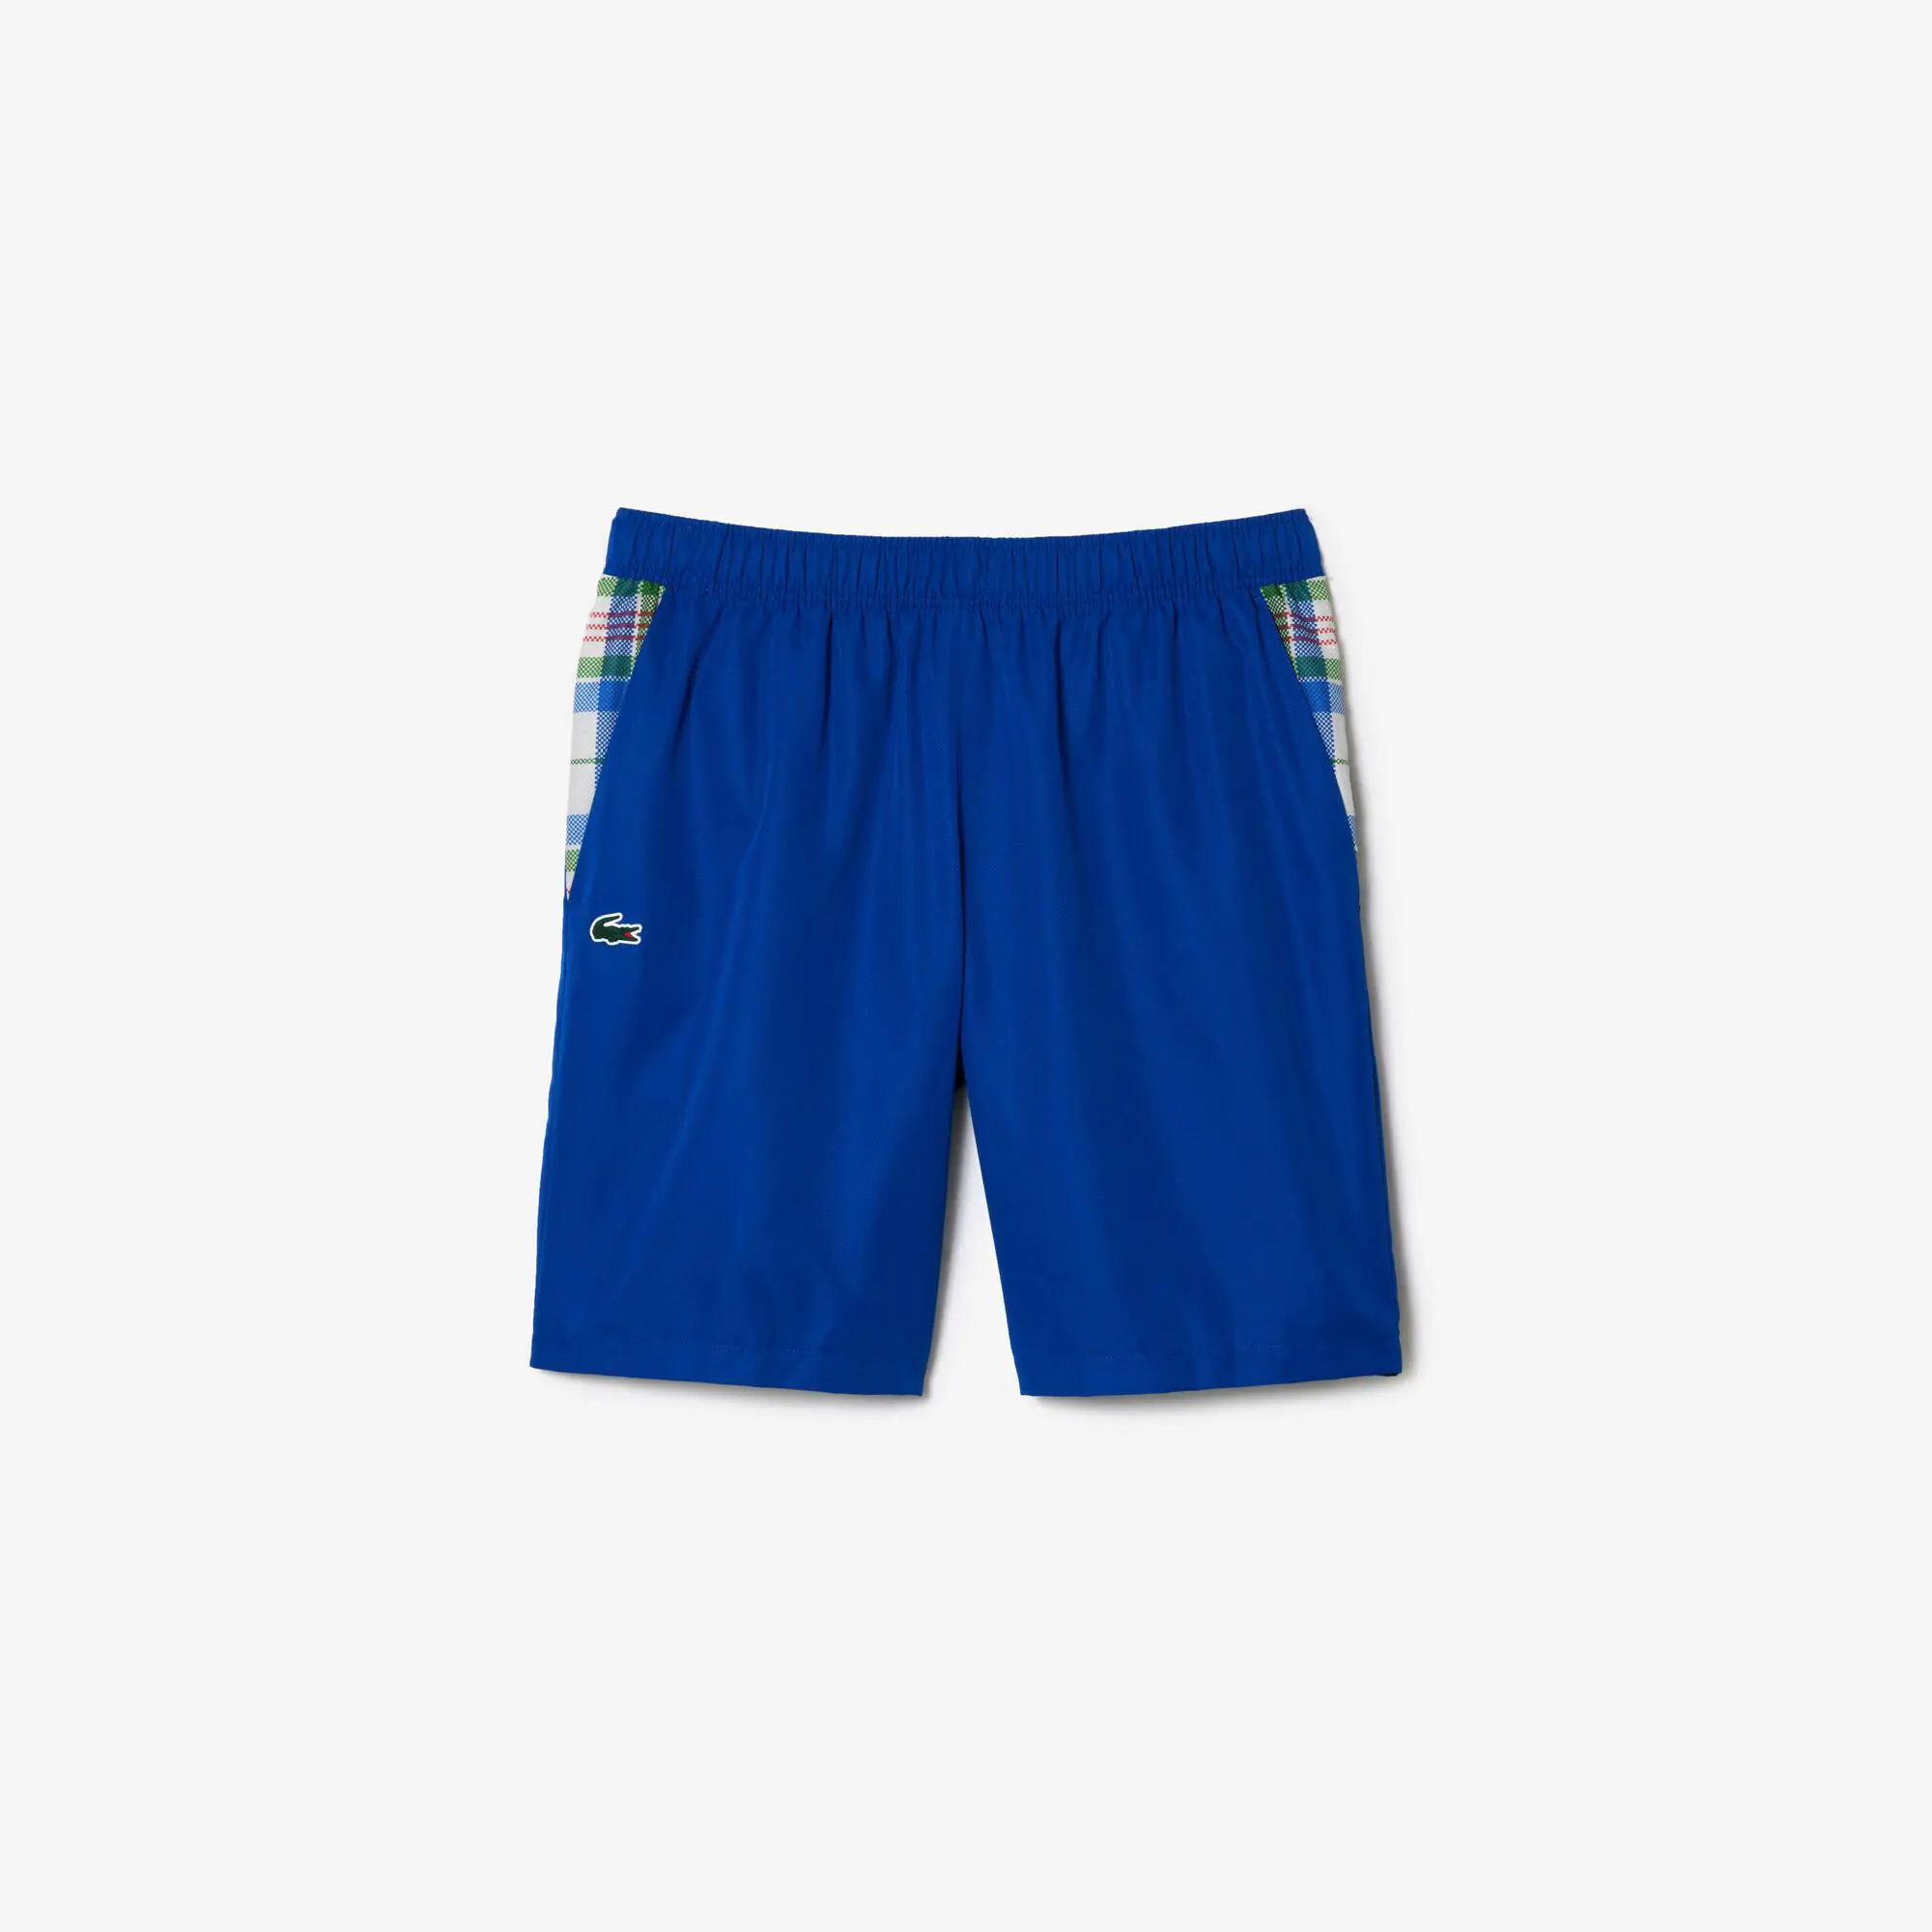 Lacoste Men’s Lacoste Tennis Checked Colourblock Shorts. 2